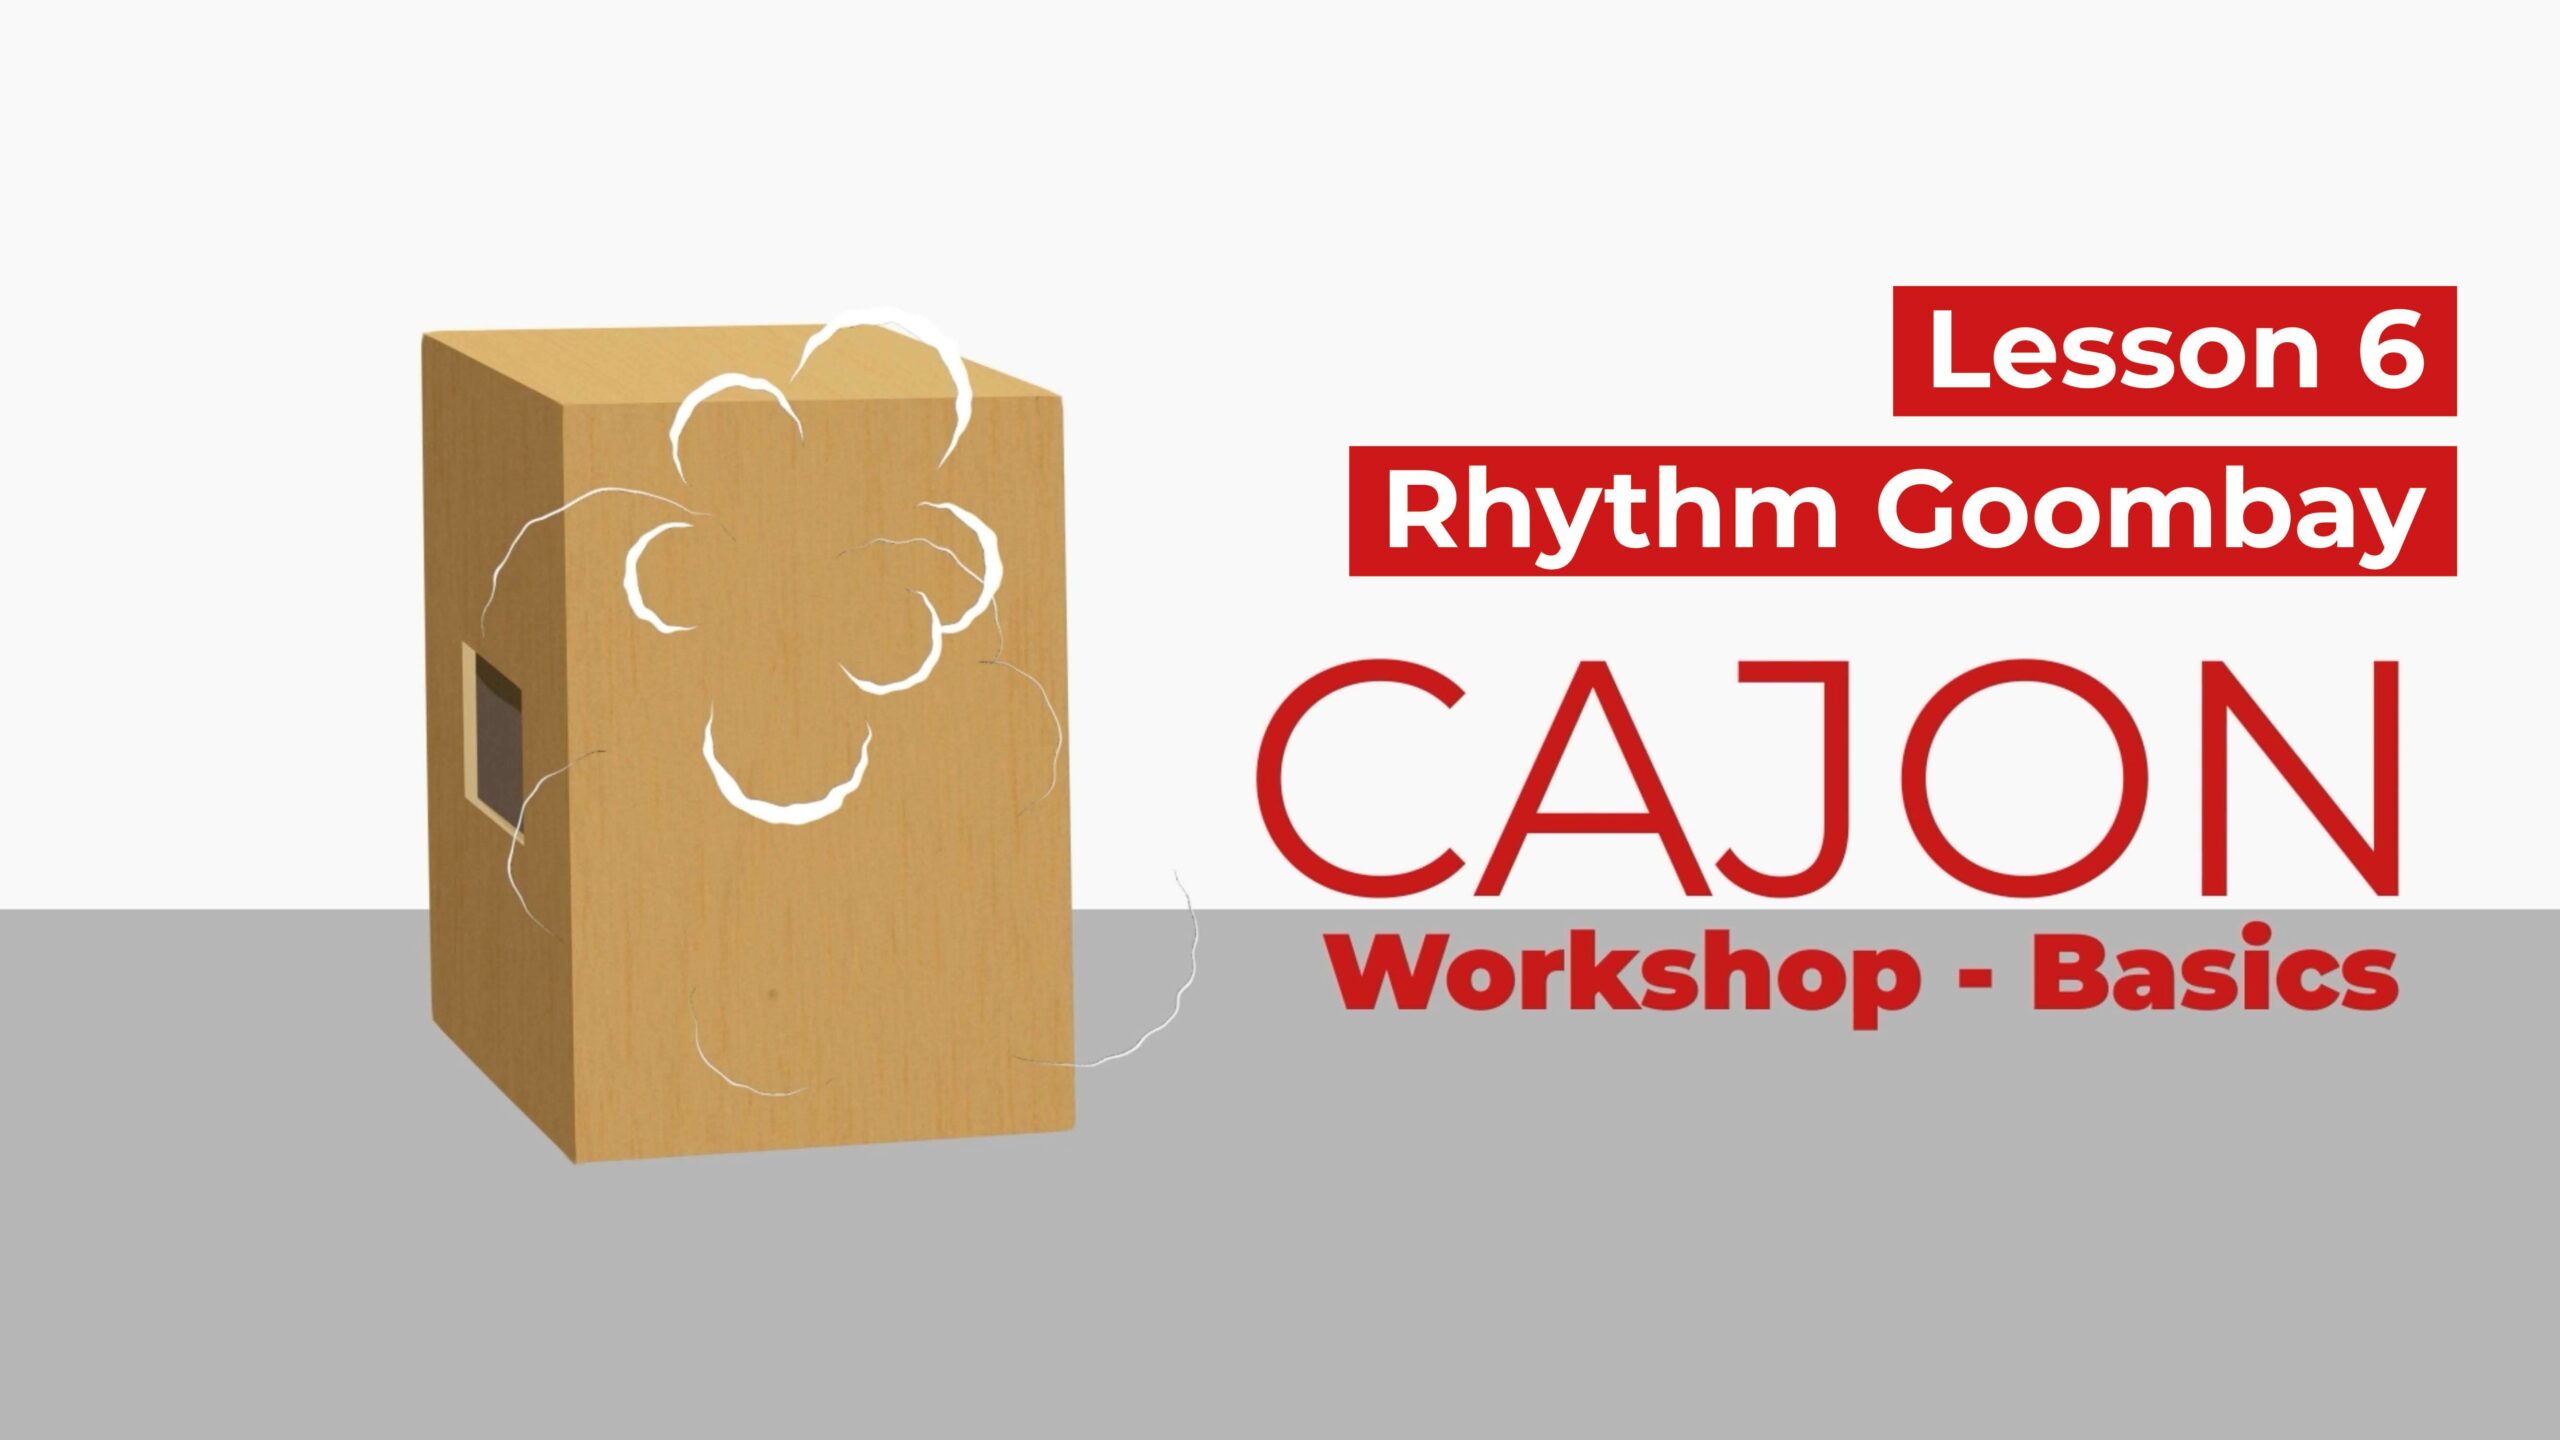 Lesson 6 - Rhythm Goombay